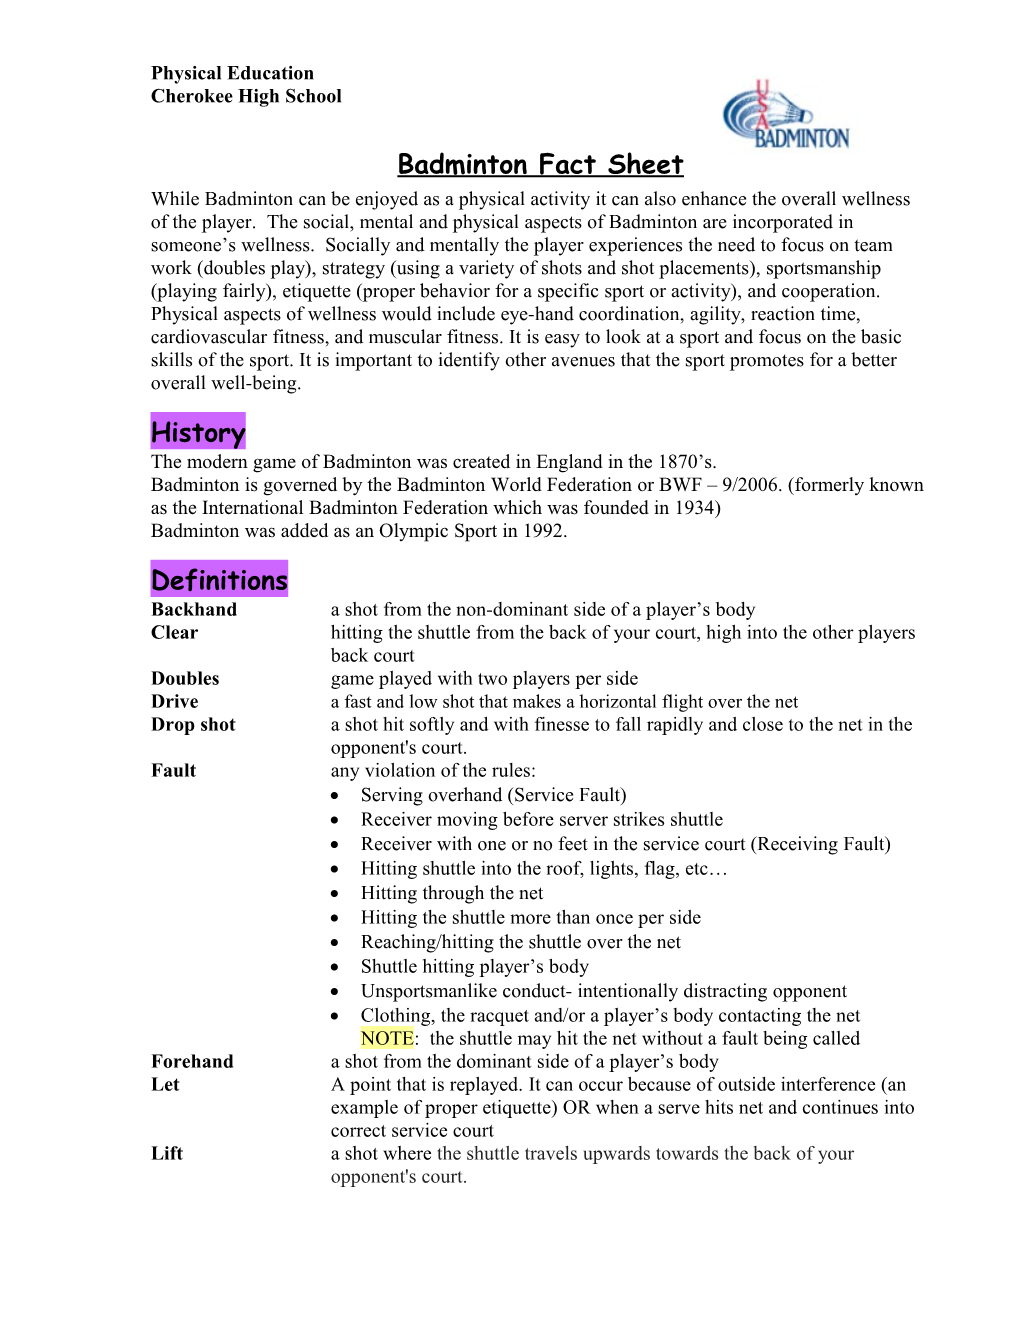 Badminton Fact Sheet